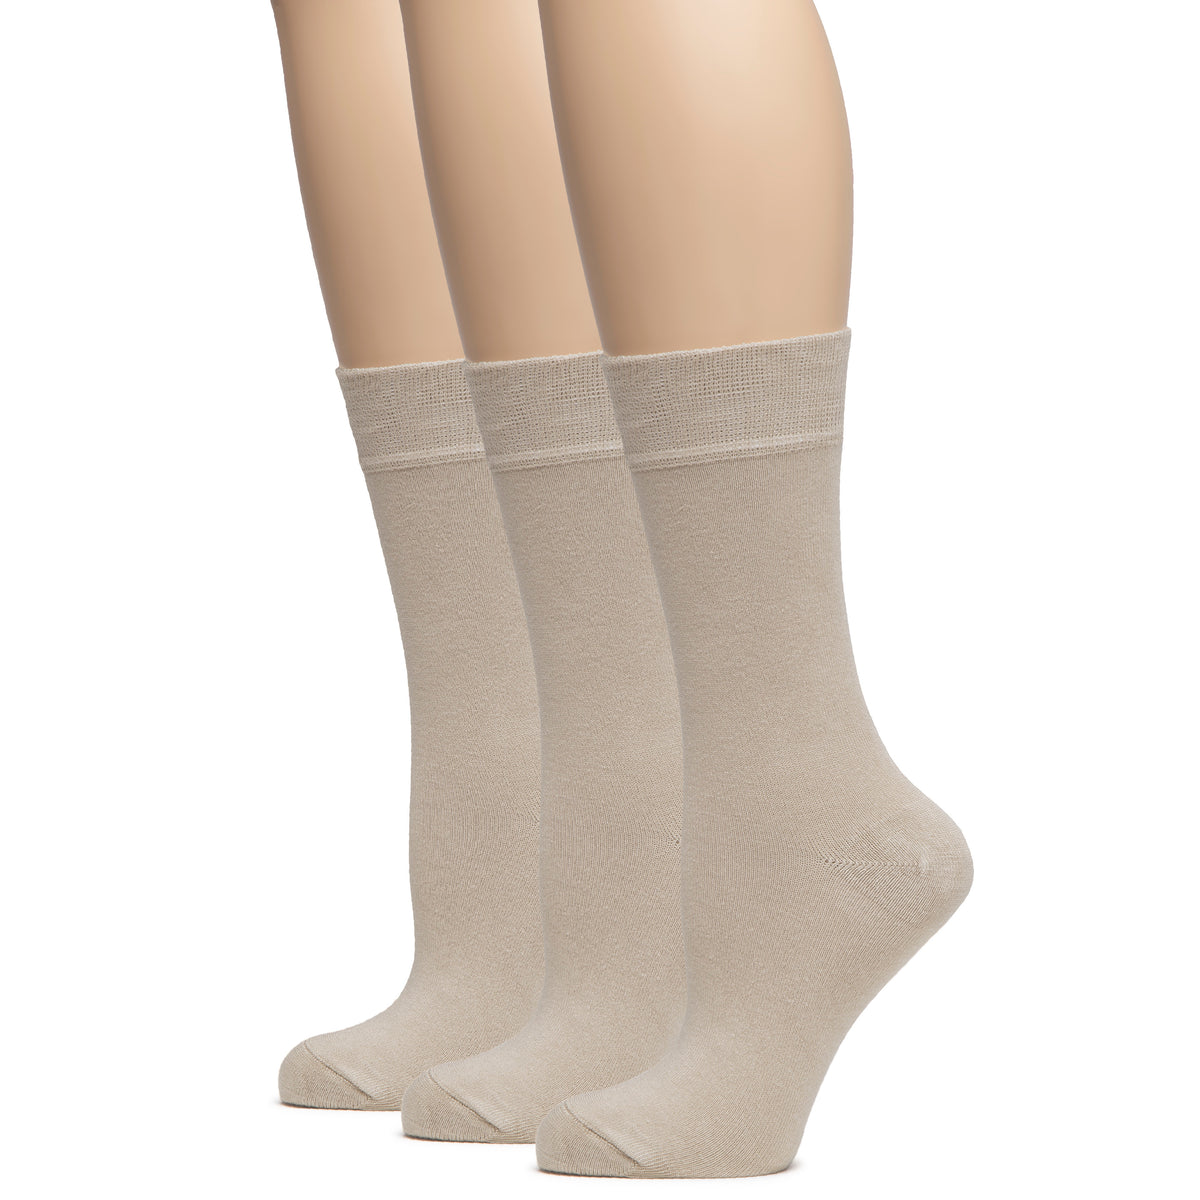 Hugh Ugoli Women's Bamboo Dress Socks Crew Soft Comfy Seamless Toe, 3 Pairs, Shoe Size: 5-8/9-11 | Shoe Size: 9-11 | Light Beige / Ecru